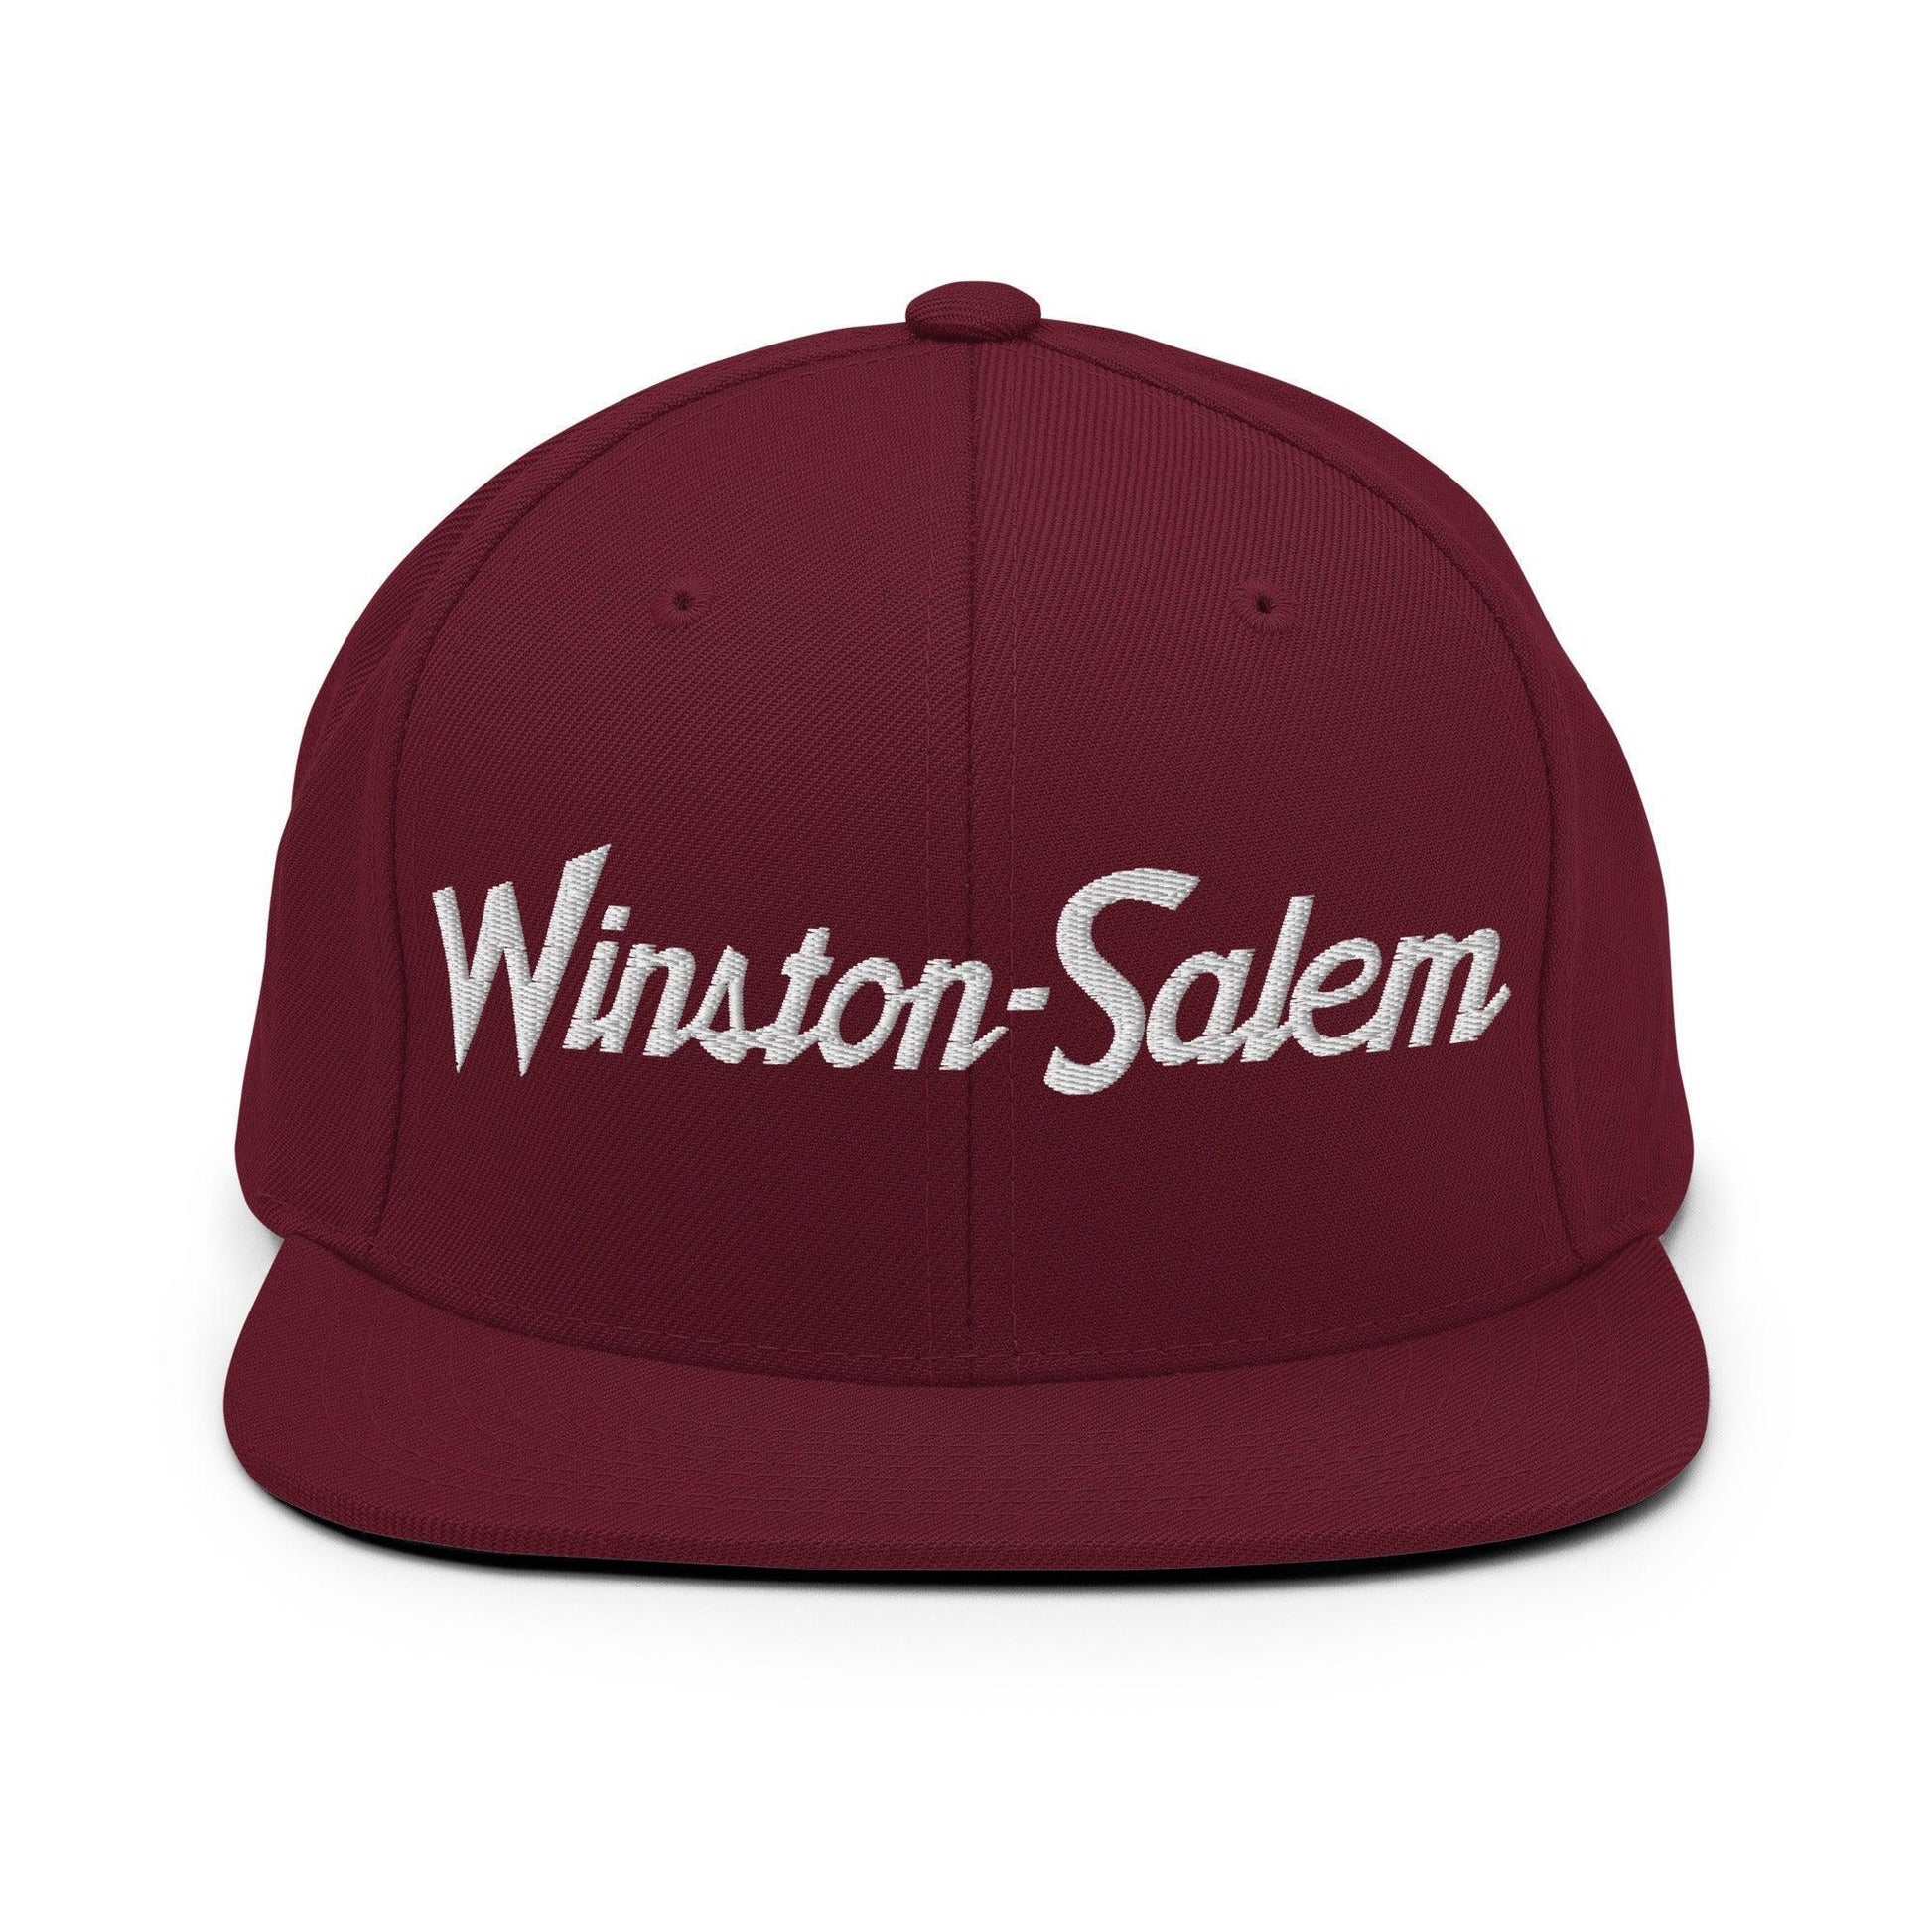 Winston-Salem Script Snapback Hat Maroon